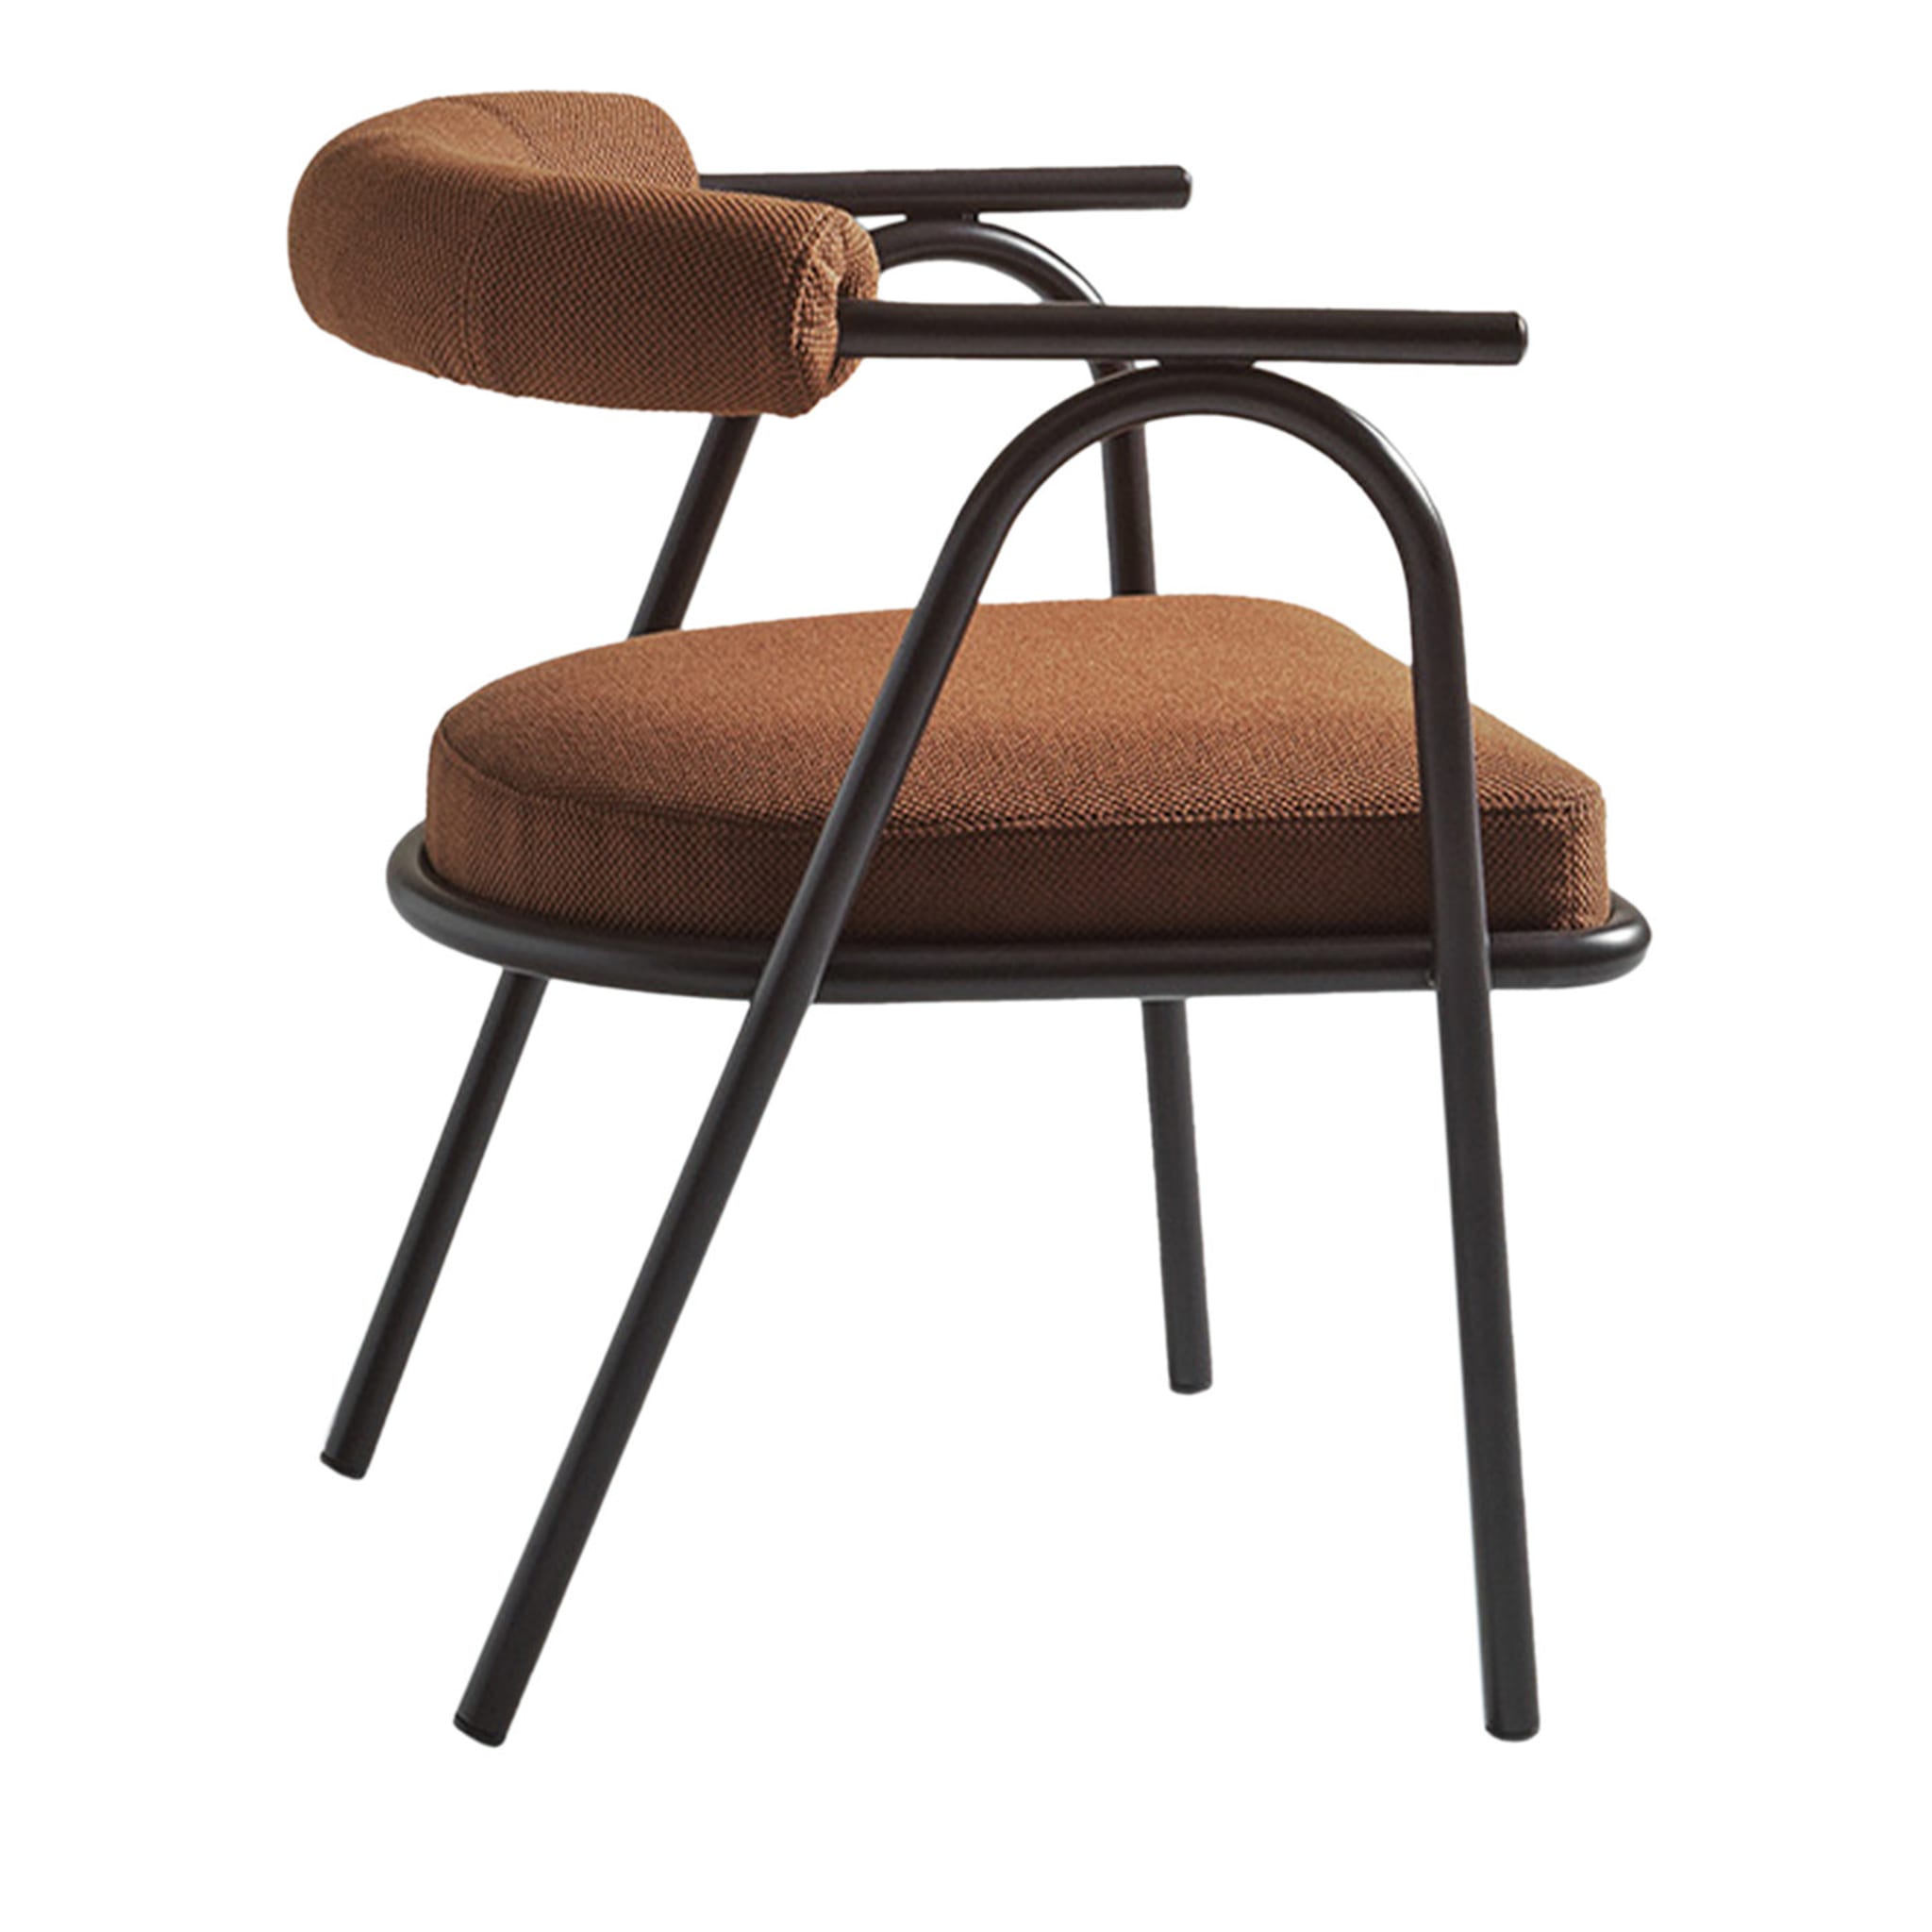 Baba Brown Chair by Serena Confalonieri - Main view